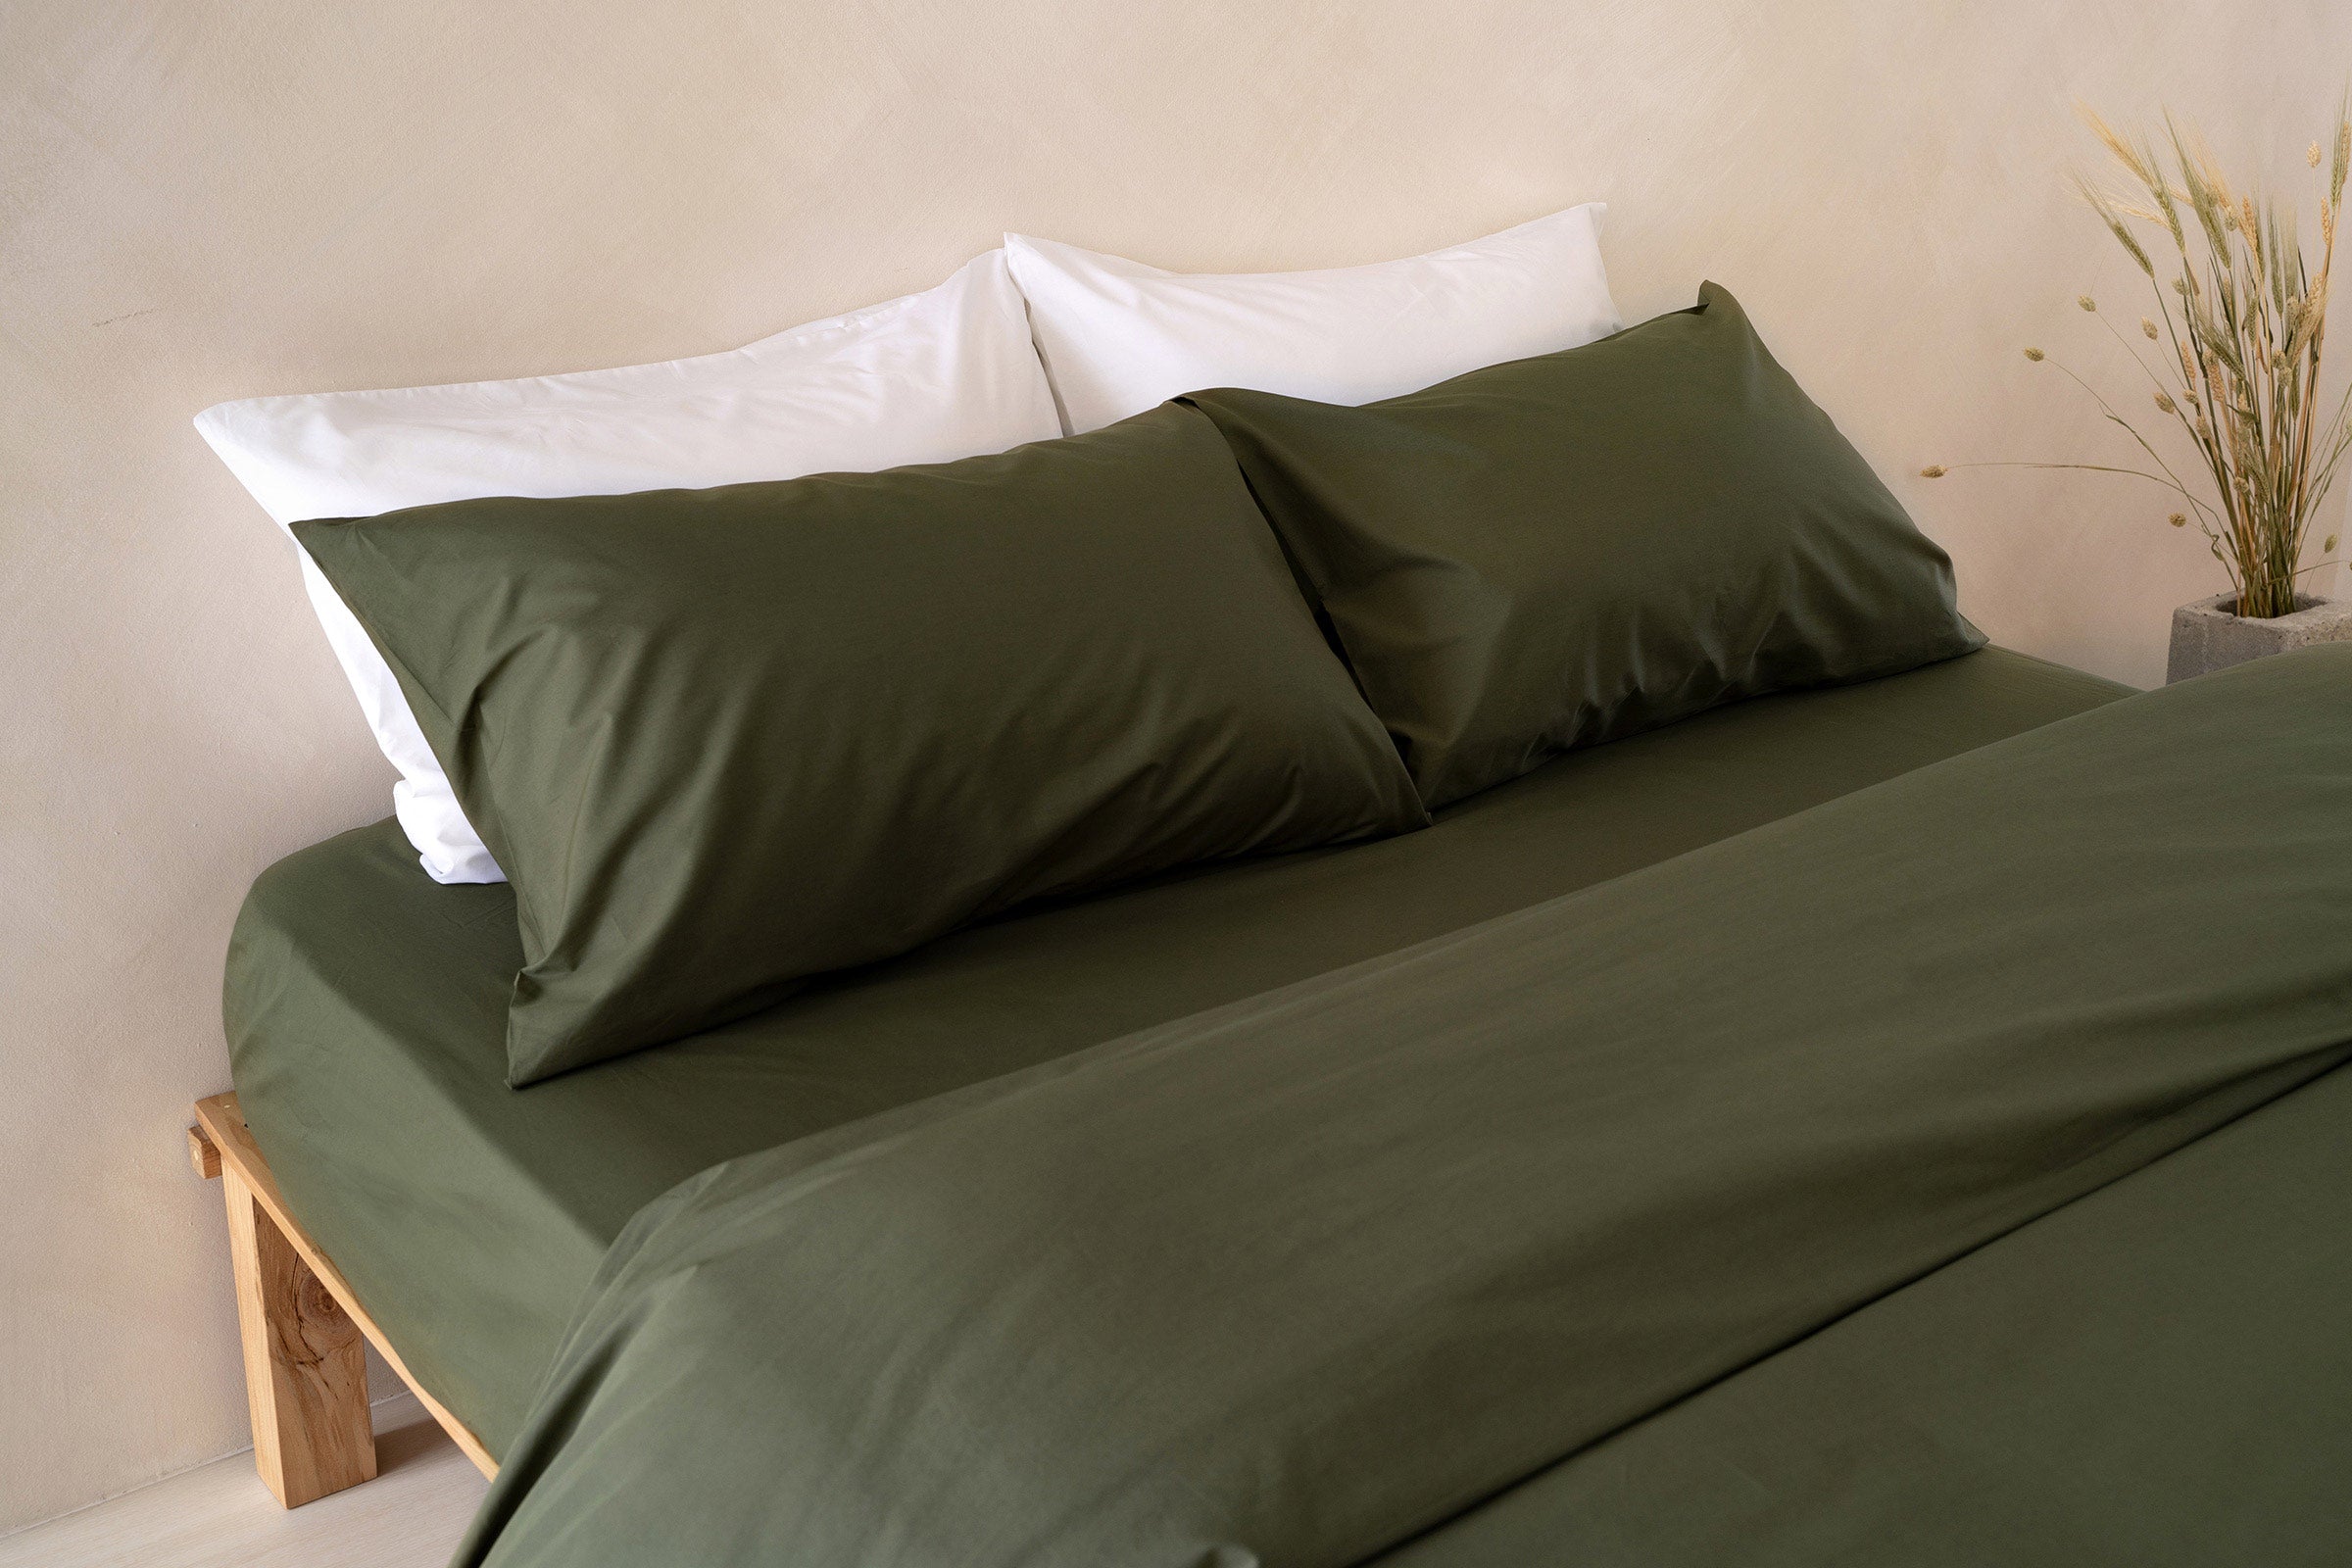 crisp-olive-fitted-sheet-duvet-cover-pillowcase-pair-white-pillowcase-pair-side-view-by-sojao.jpg